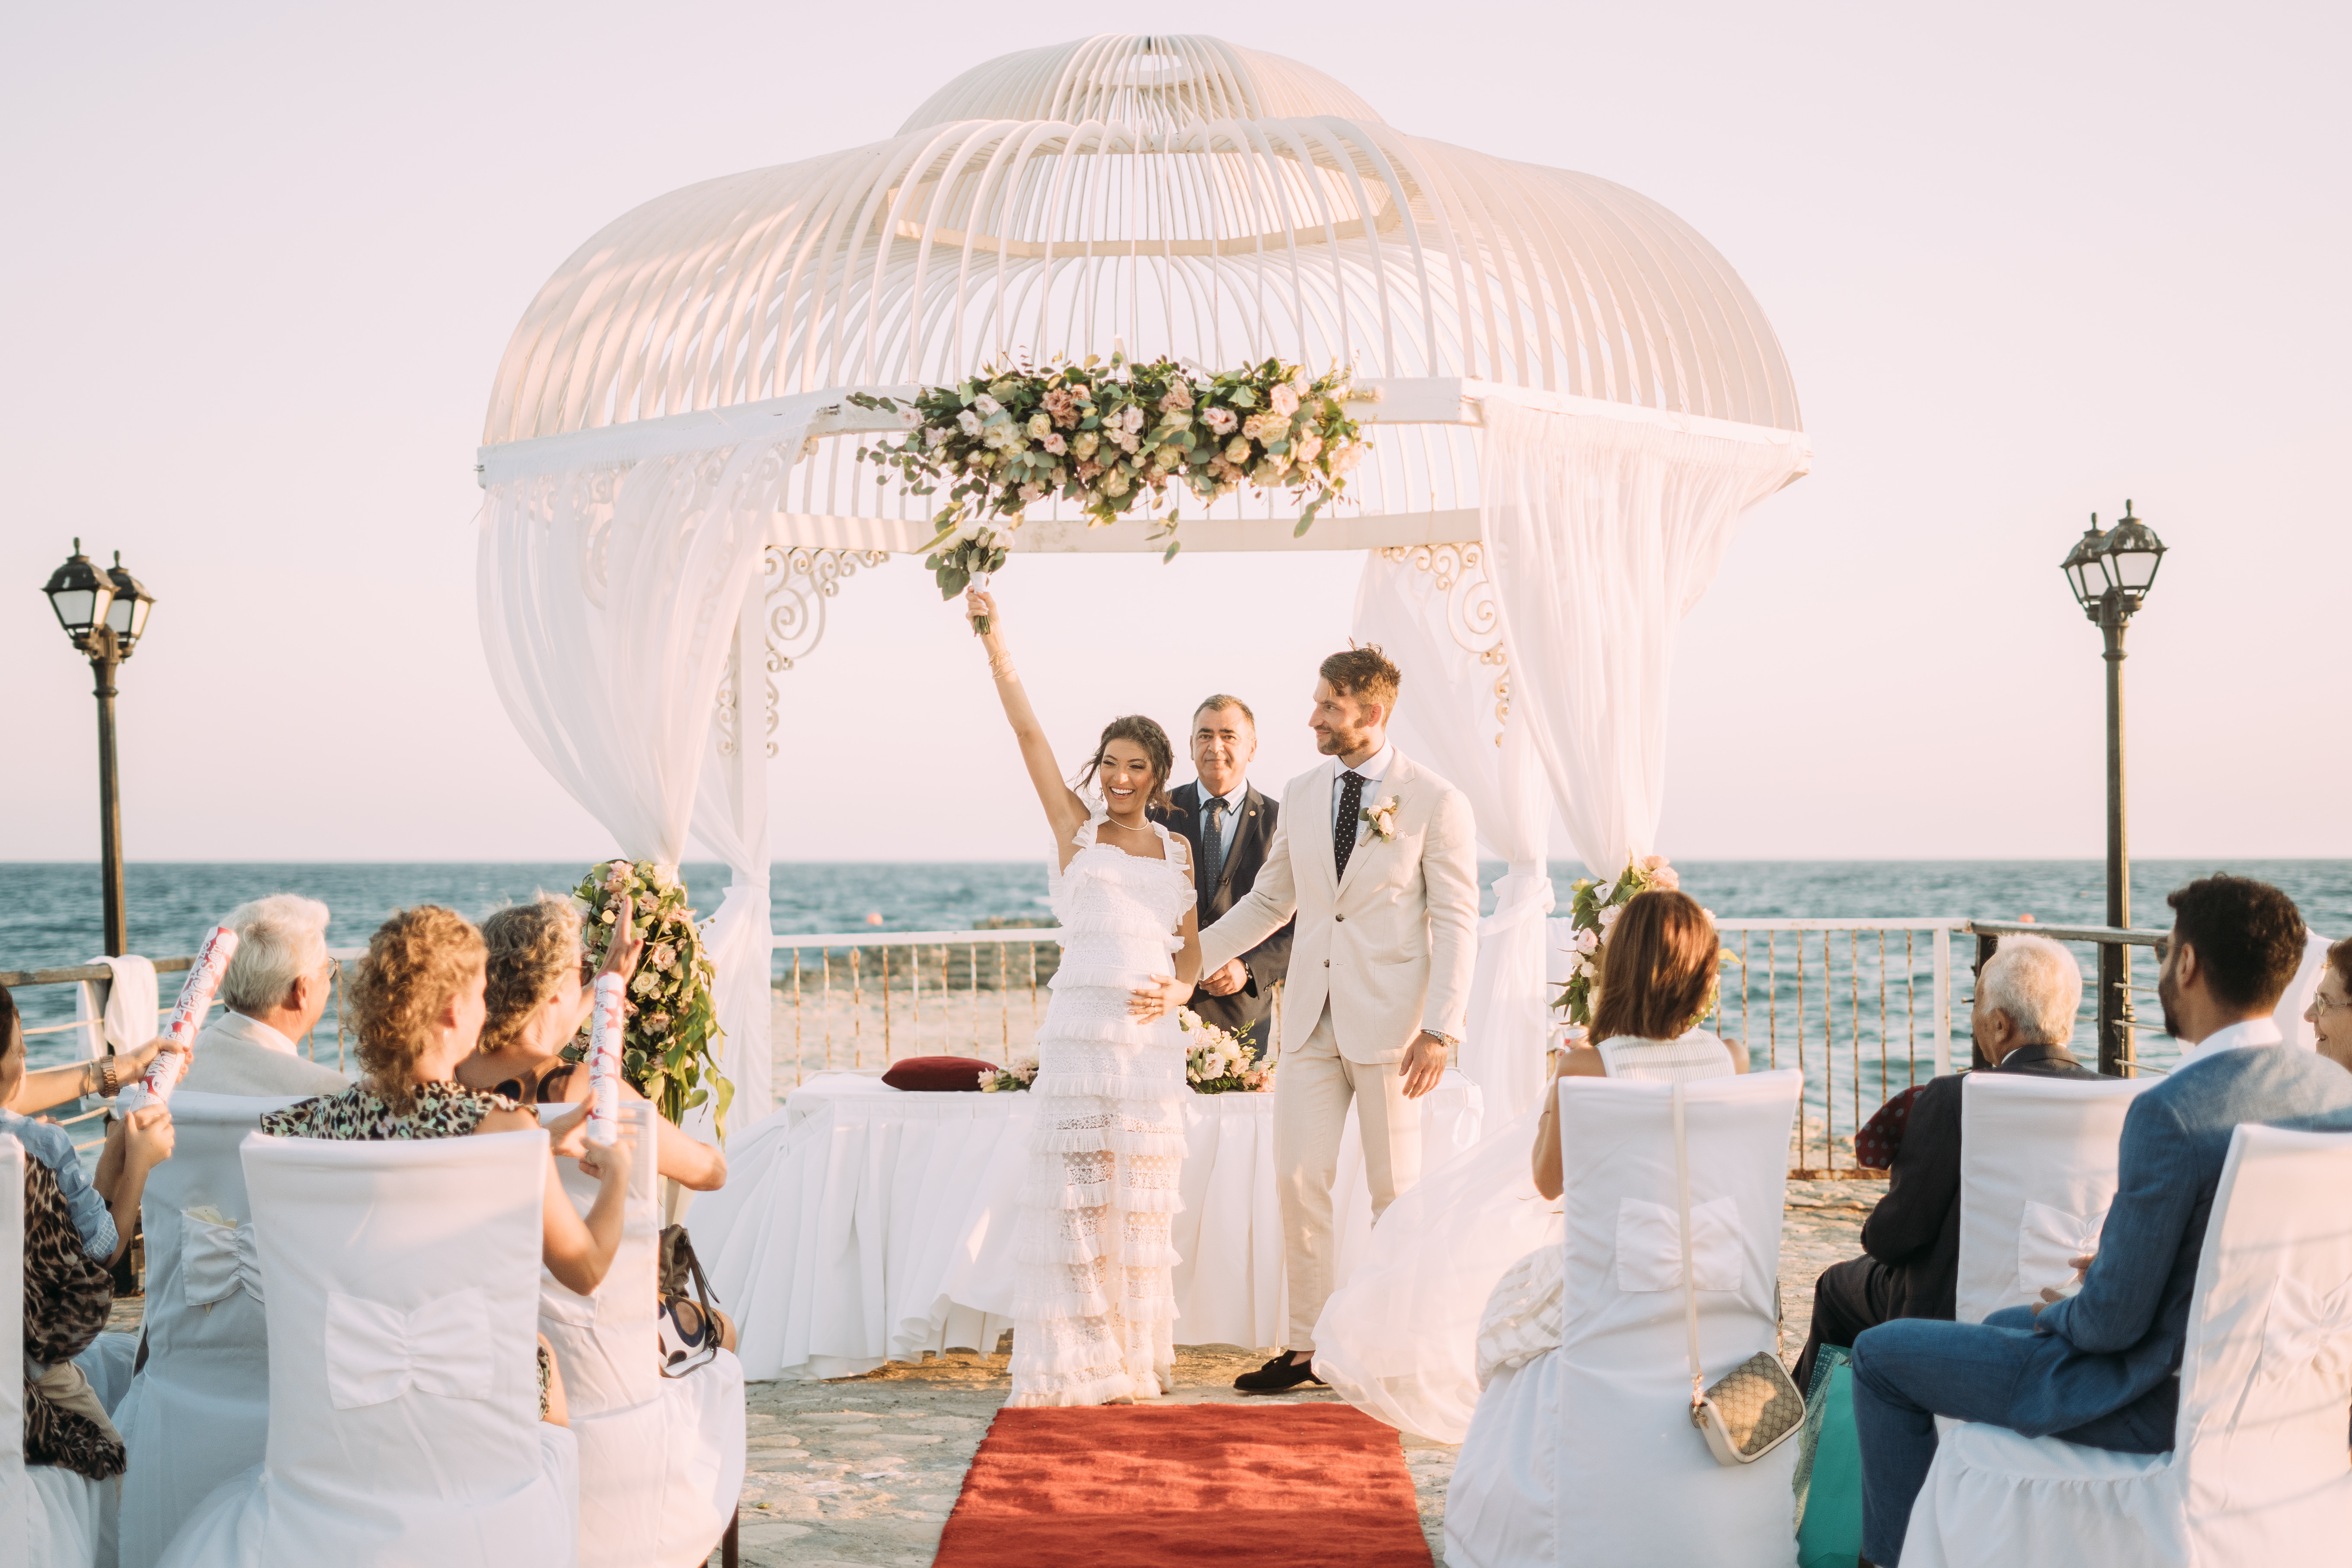 Book your wedding day in Elias Beach Hotel Limassol